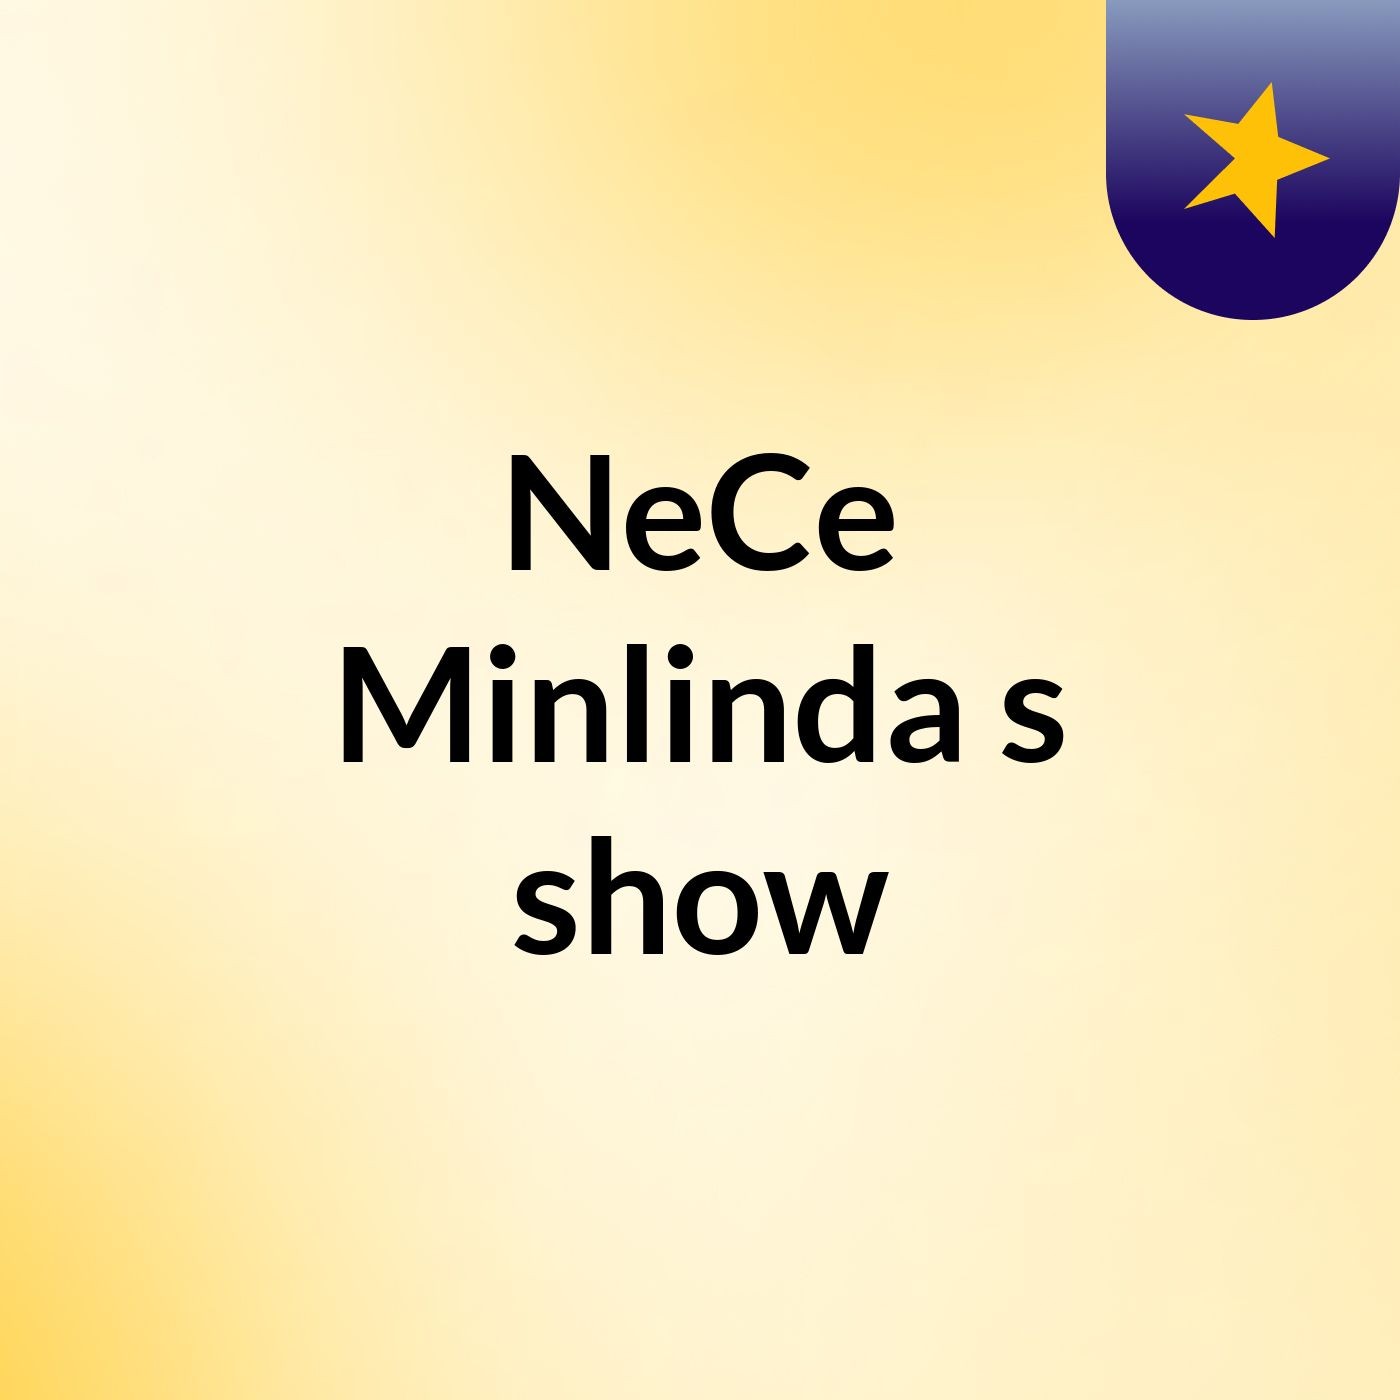 NeCe Minlinda's show